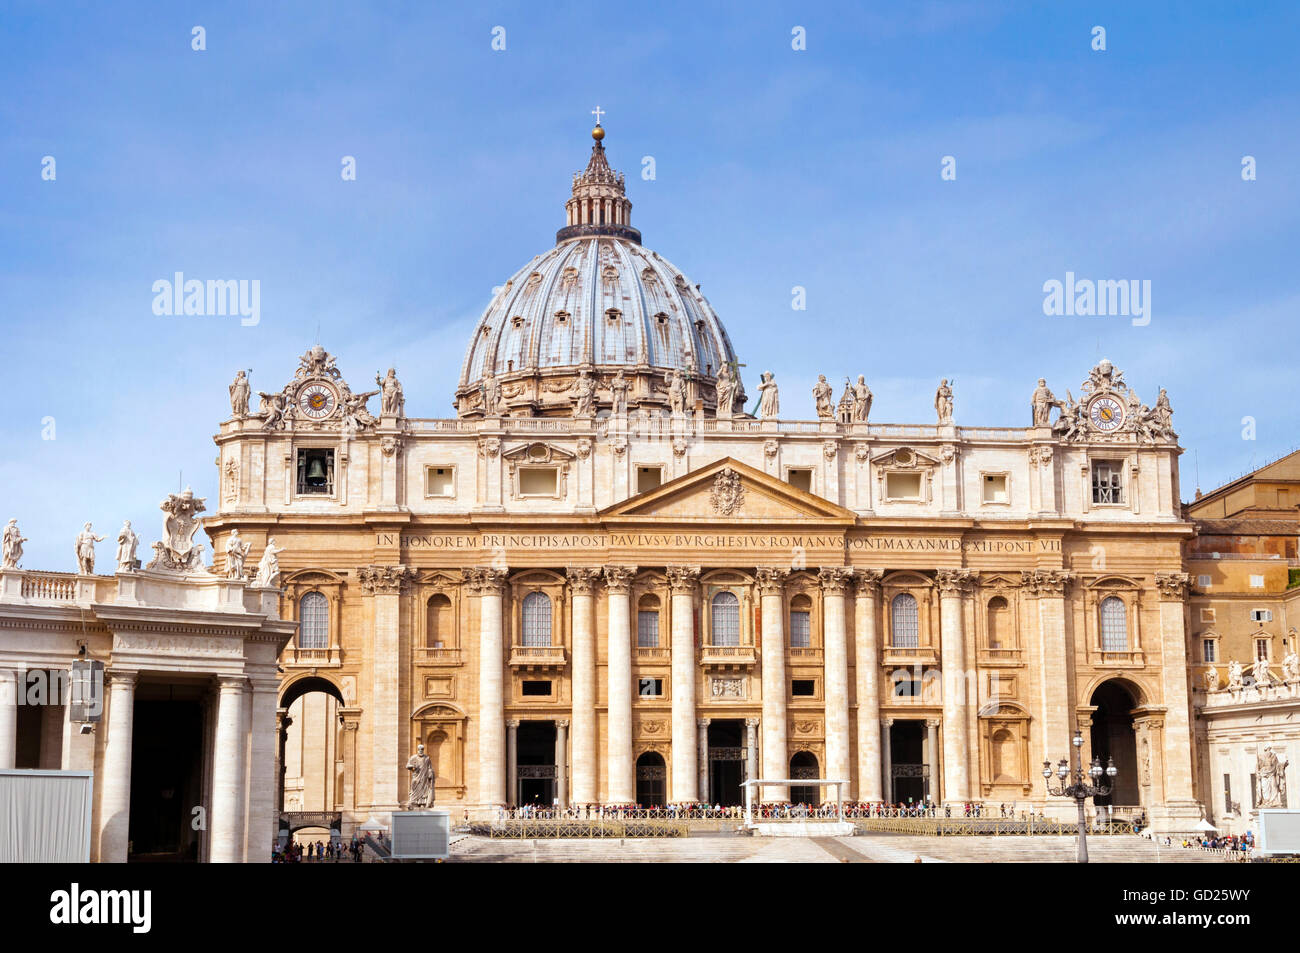 Facade of St. Peter's Basilica, Piazza San Pietro, Vatican City, UNESCO World Heritage Site, Rome, Lazio, Italy, Europe Stock Photo